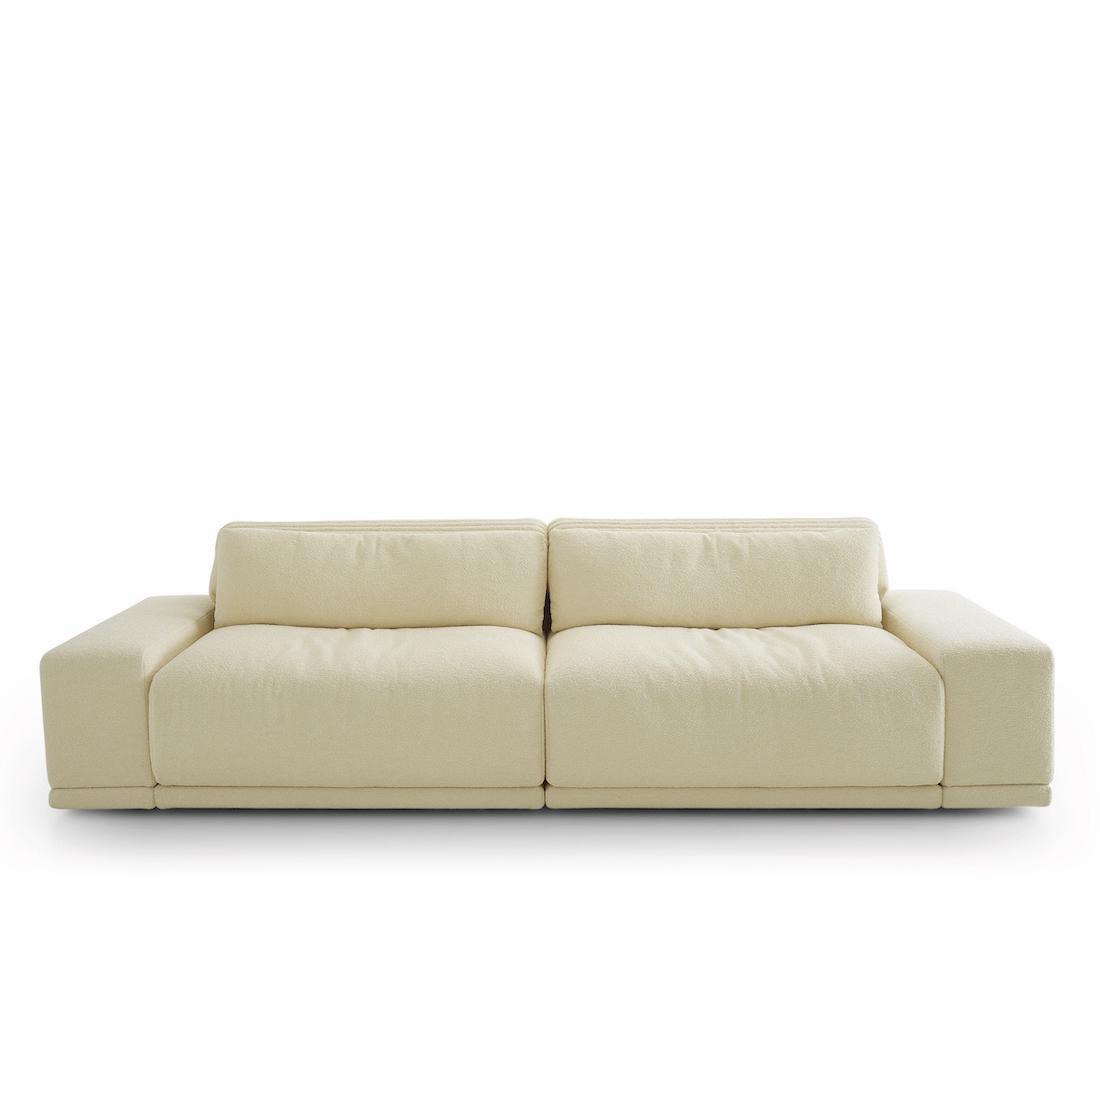 Upholstered-sofa-grand-angle-two-seater-photo-ligne-roset